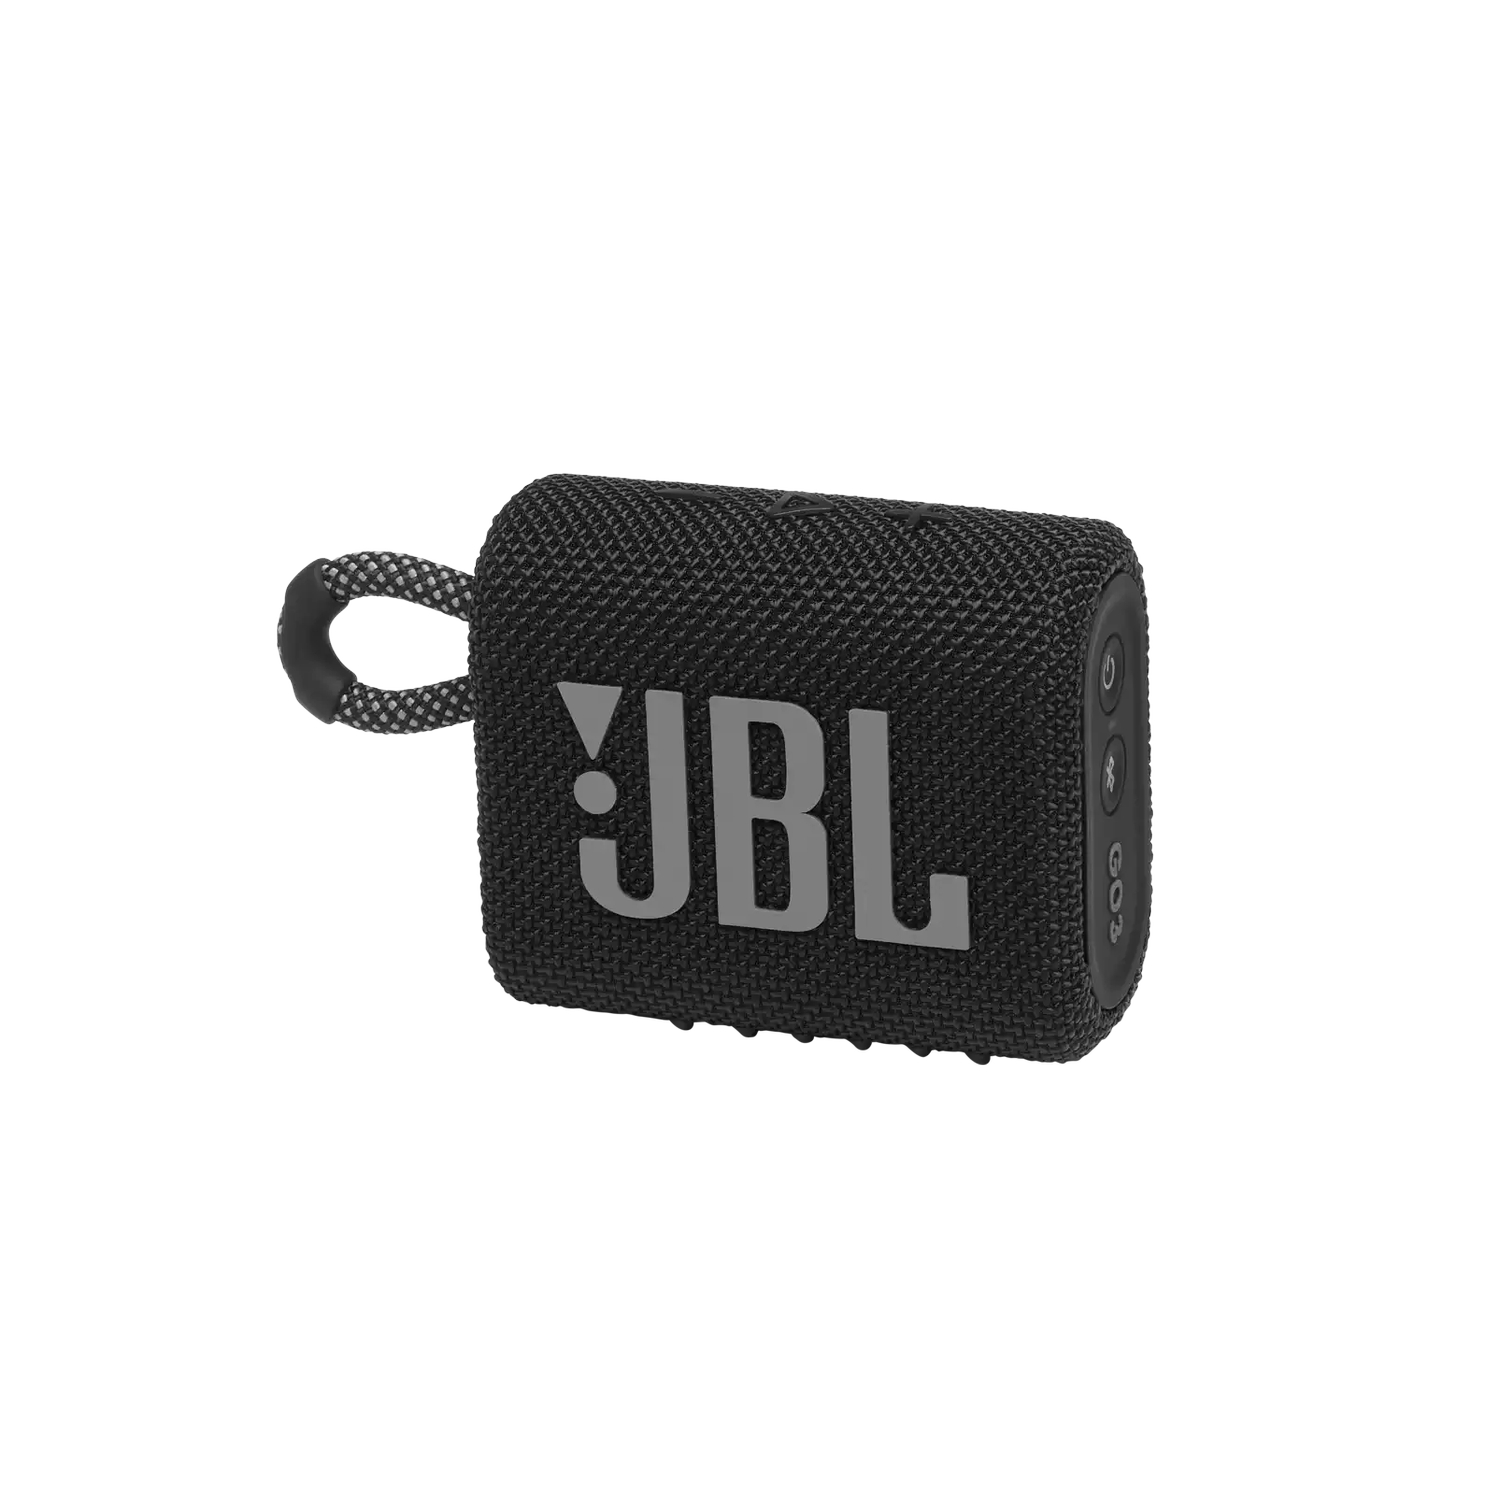 Портативная акустика JBL GO 3 черная портативная акустика jbl go 3 бирюзовая